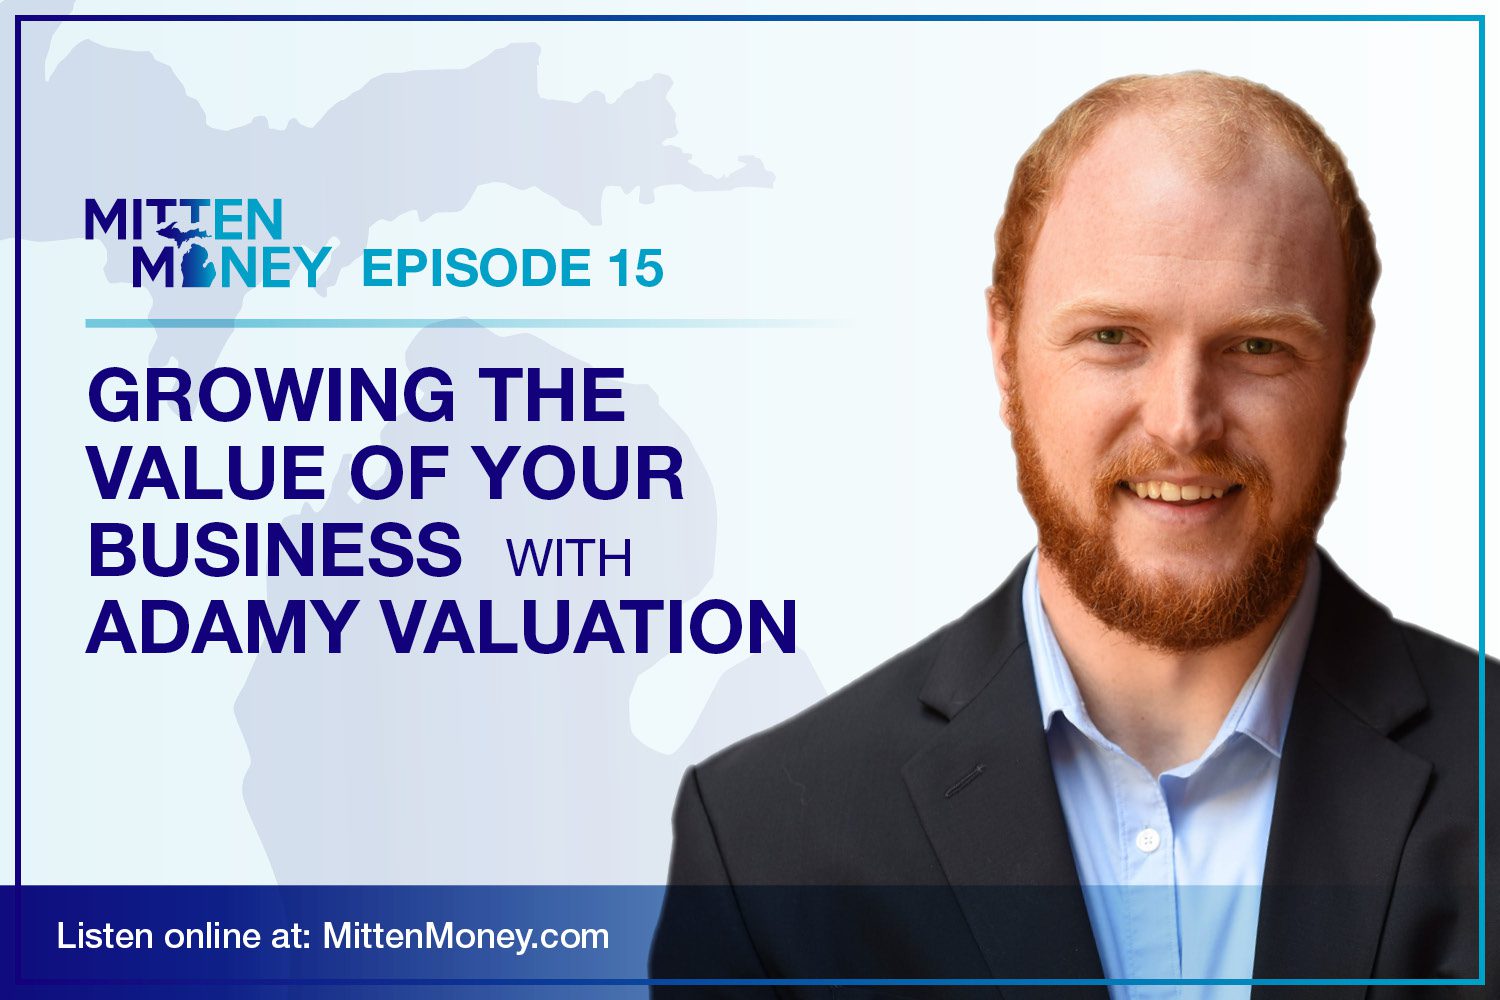 Adamy Valuation Podcast Episode 15